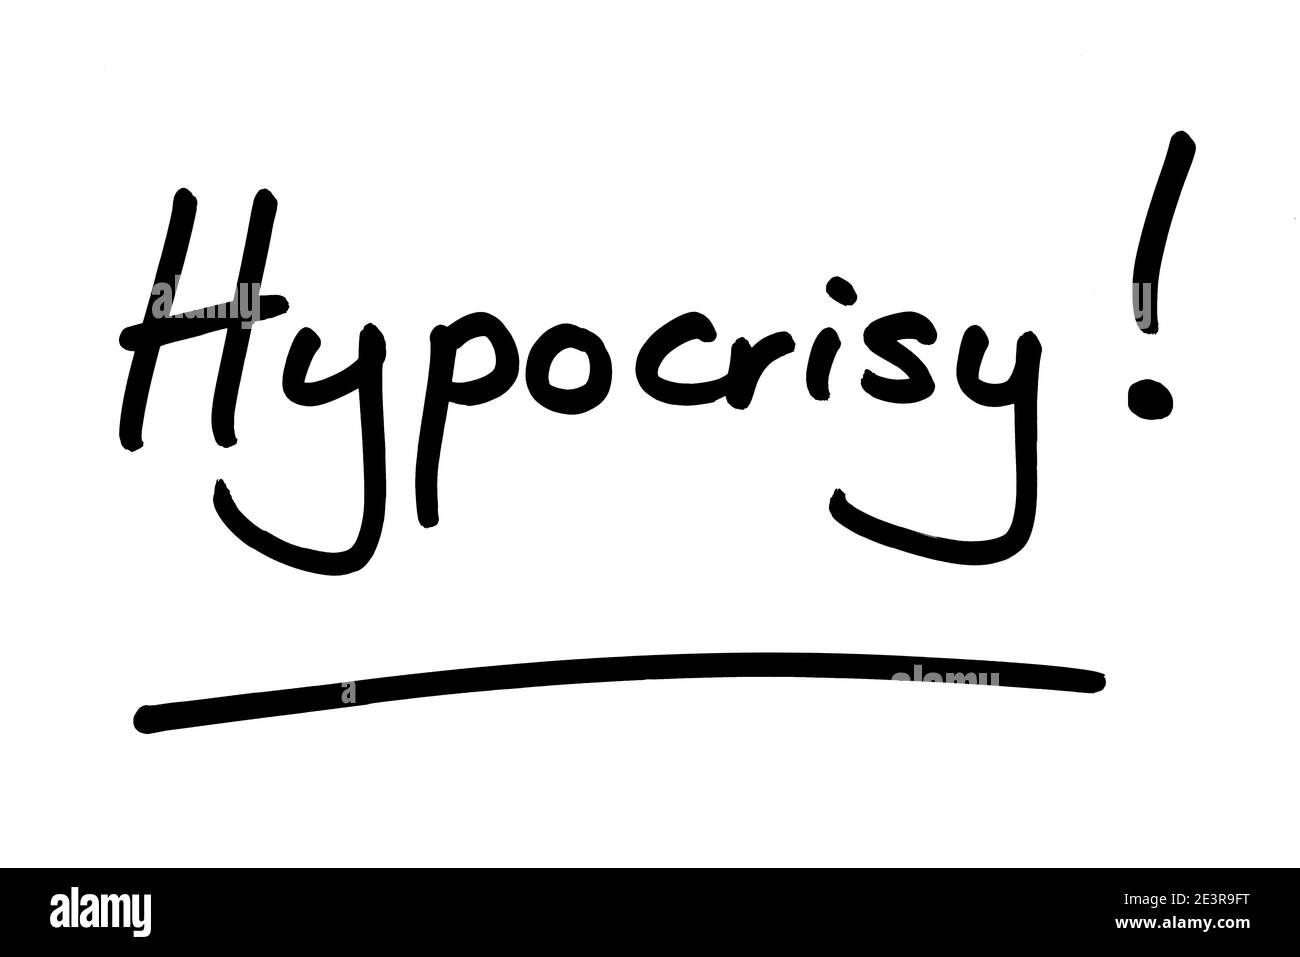 Hypocrisy! handwritten on a white background. Stock Photo